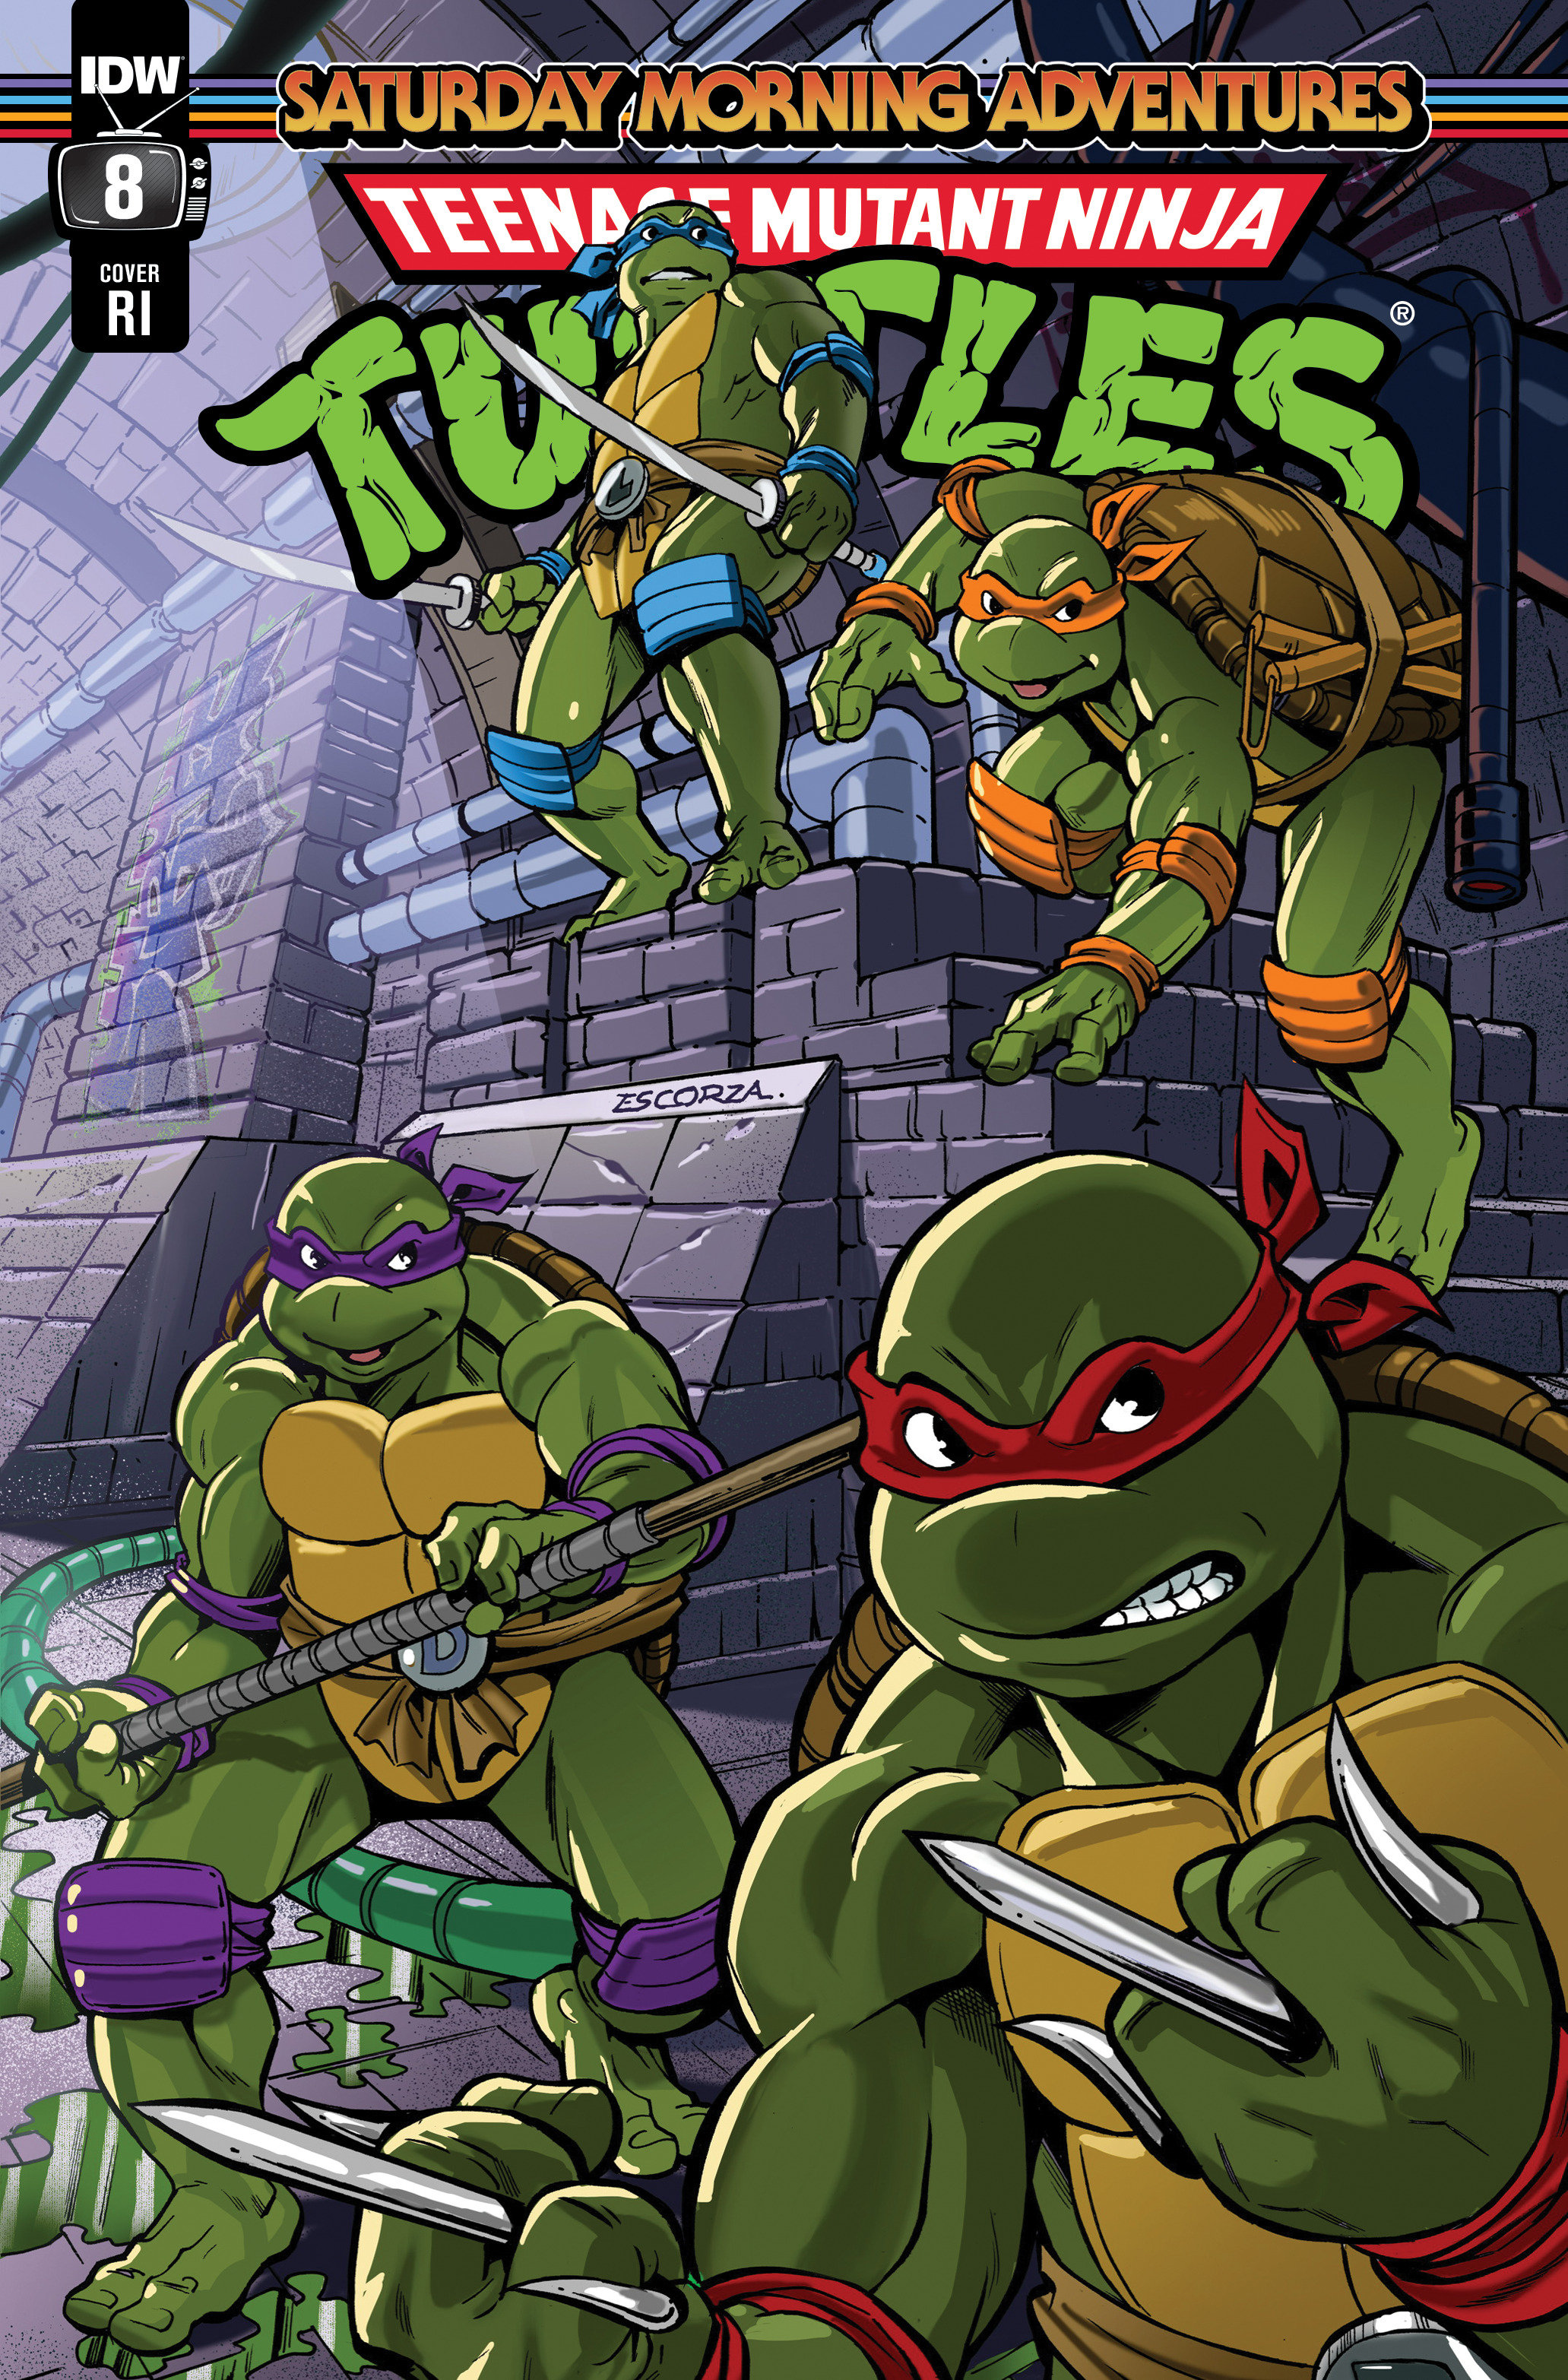 Teenage Mutant Ninja Turtles Saturday Morning Adventures Continued! #8 Cover Escorzas 1 for 10 Incentive